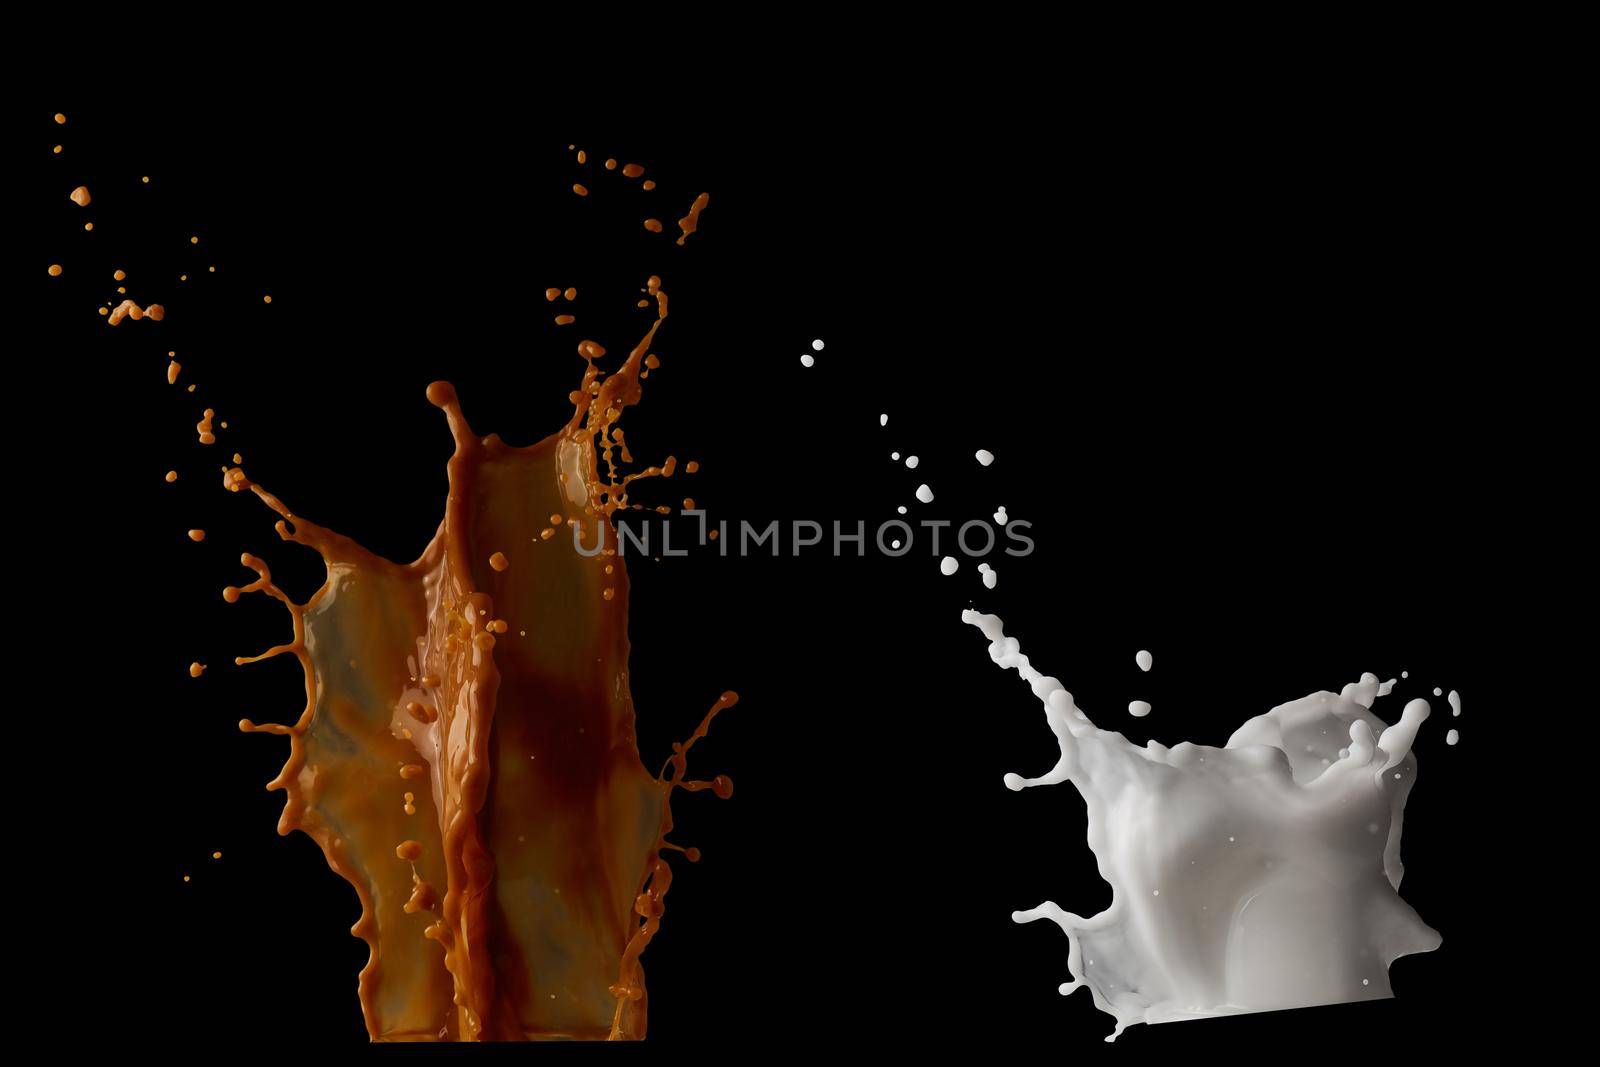 Coffee with milk splashing on isolated on black background